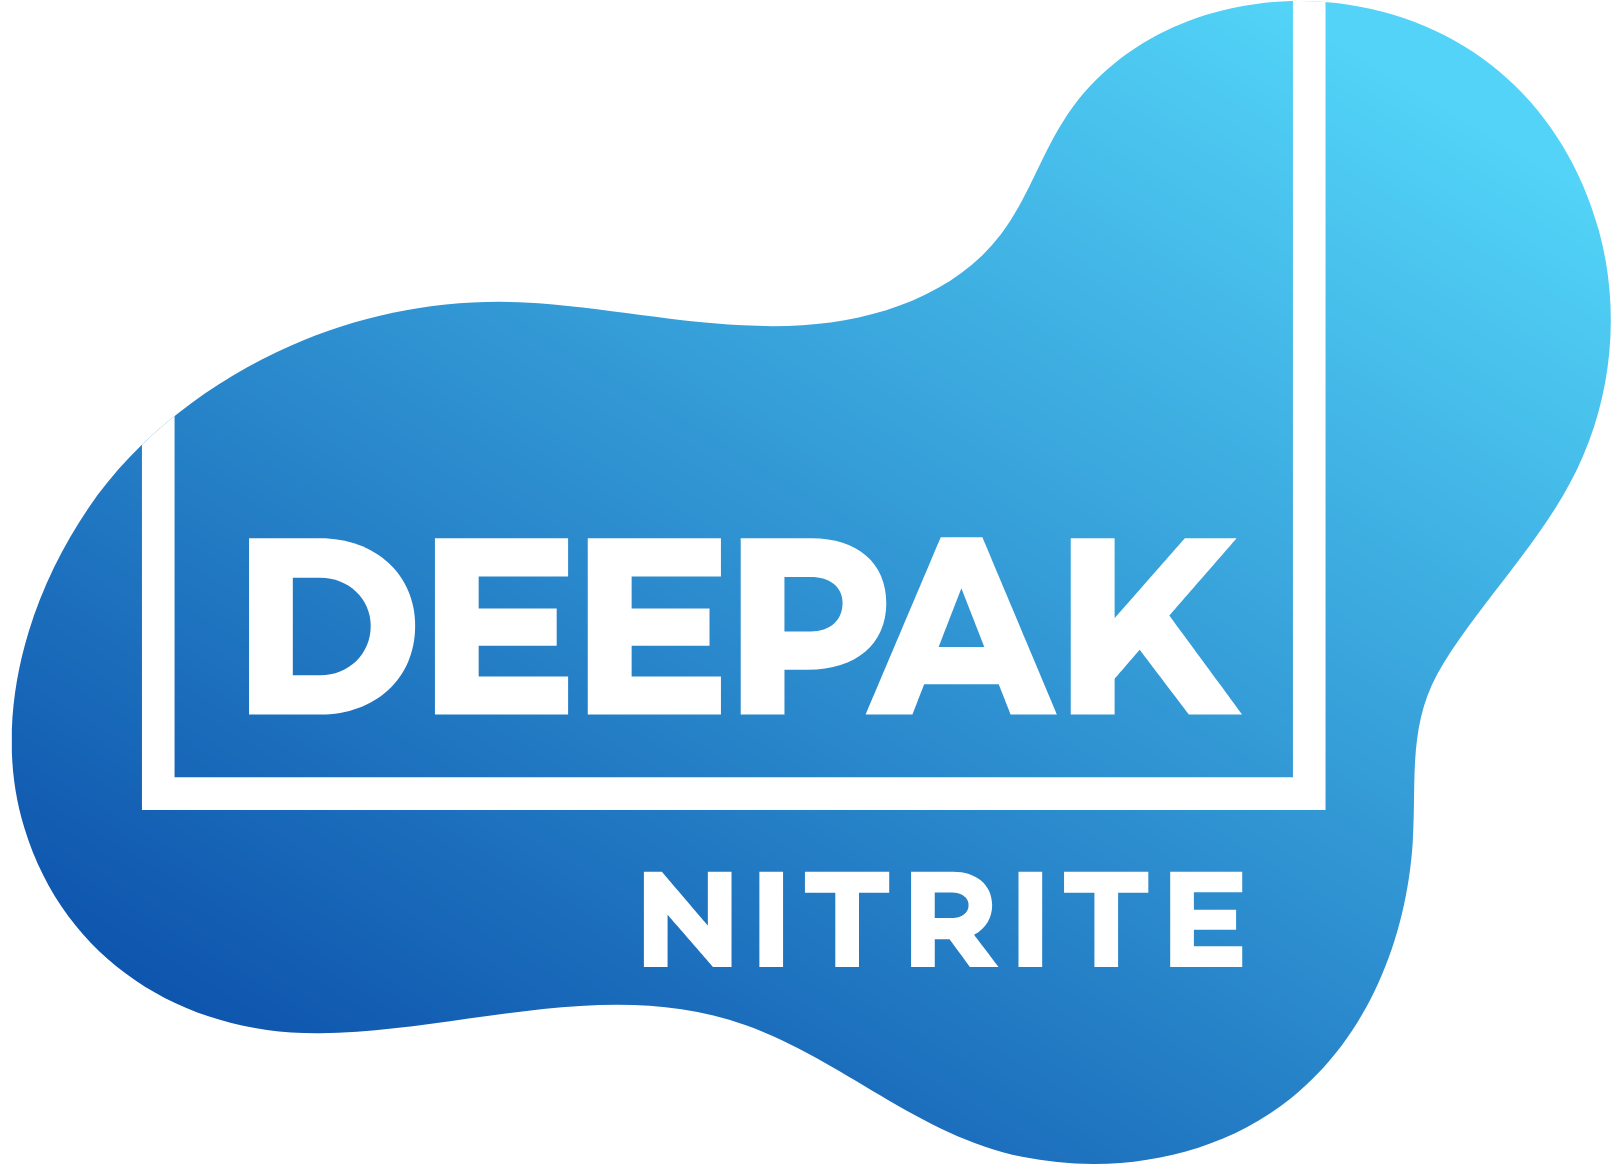 Deepak Nitrite logo (transparent PNG)